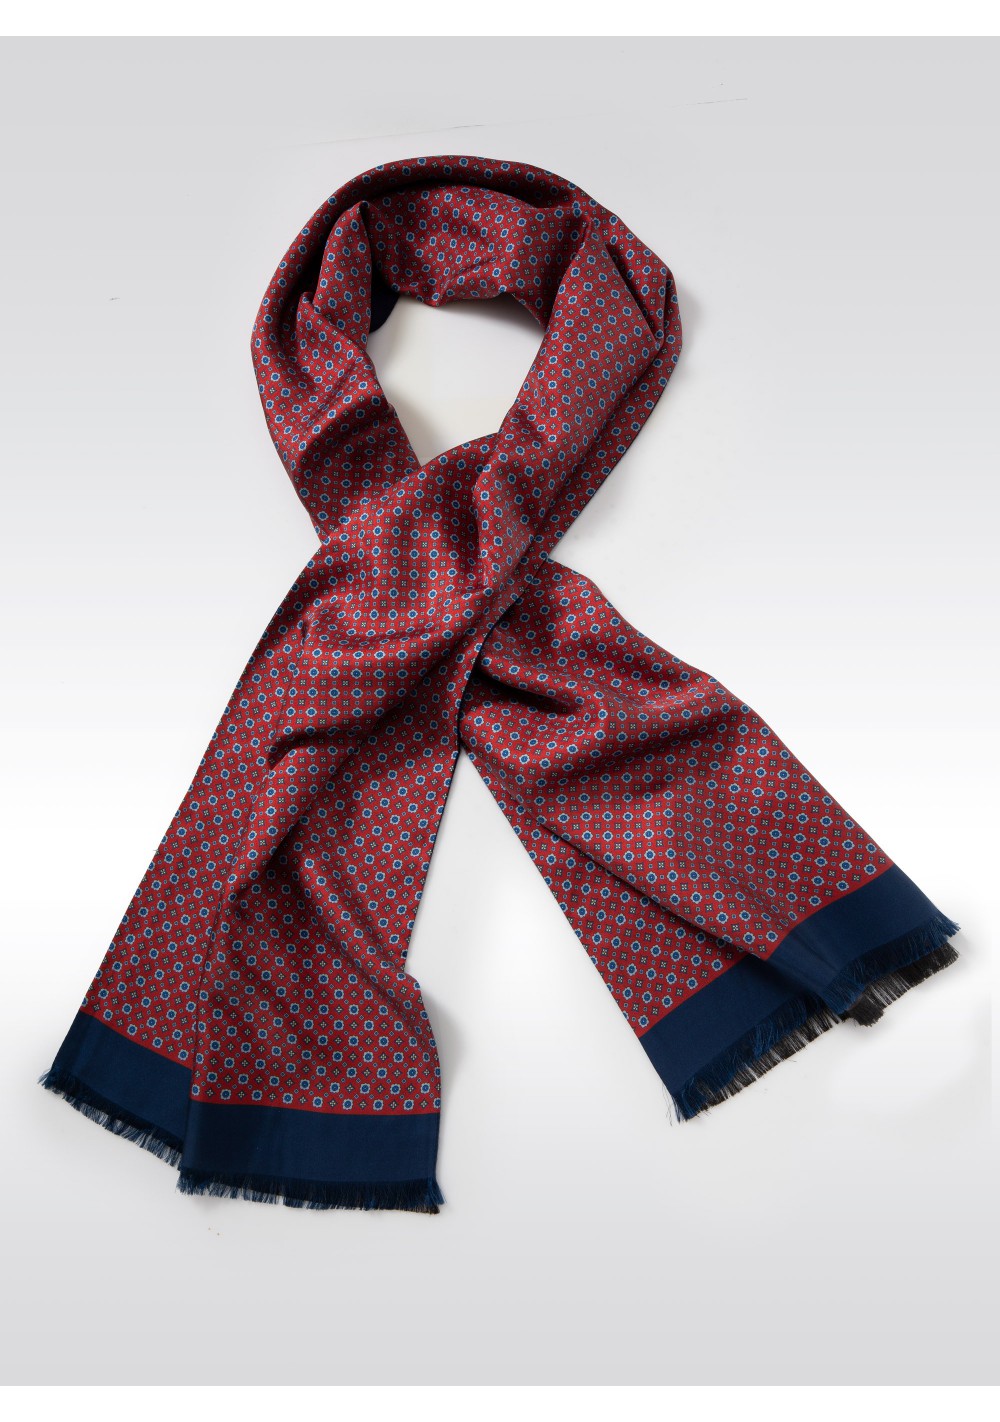 Geometric Print Menswear Silk Scarf in Burgundy and Navy 